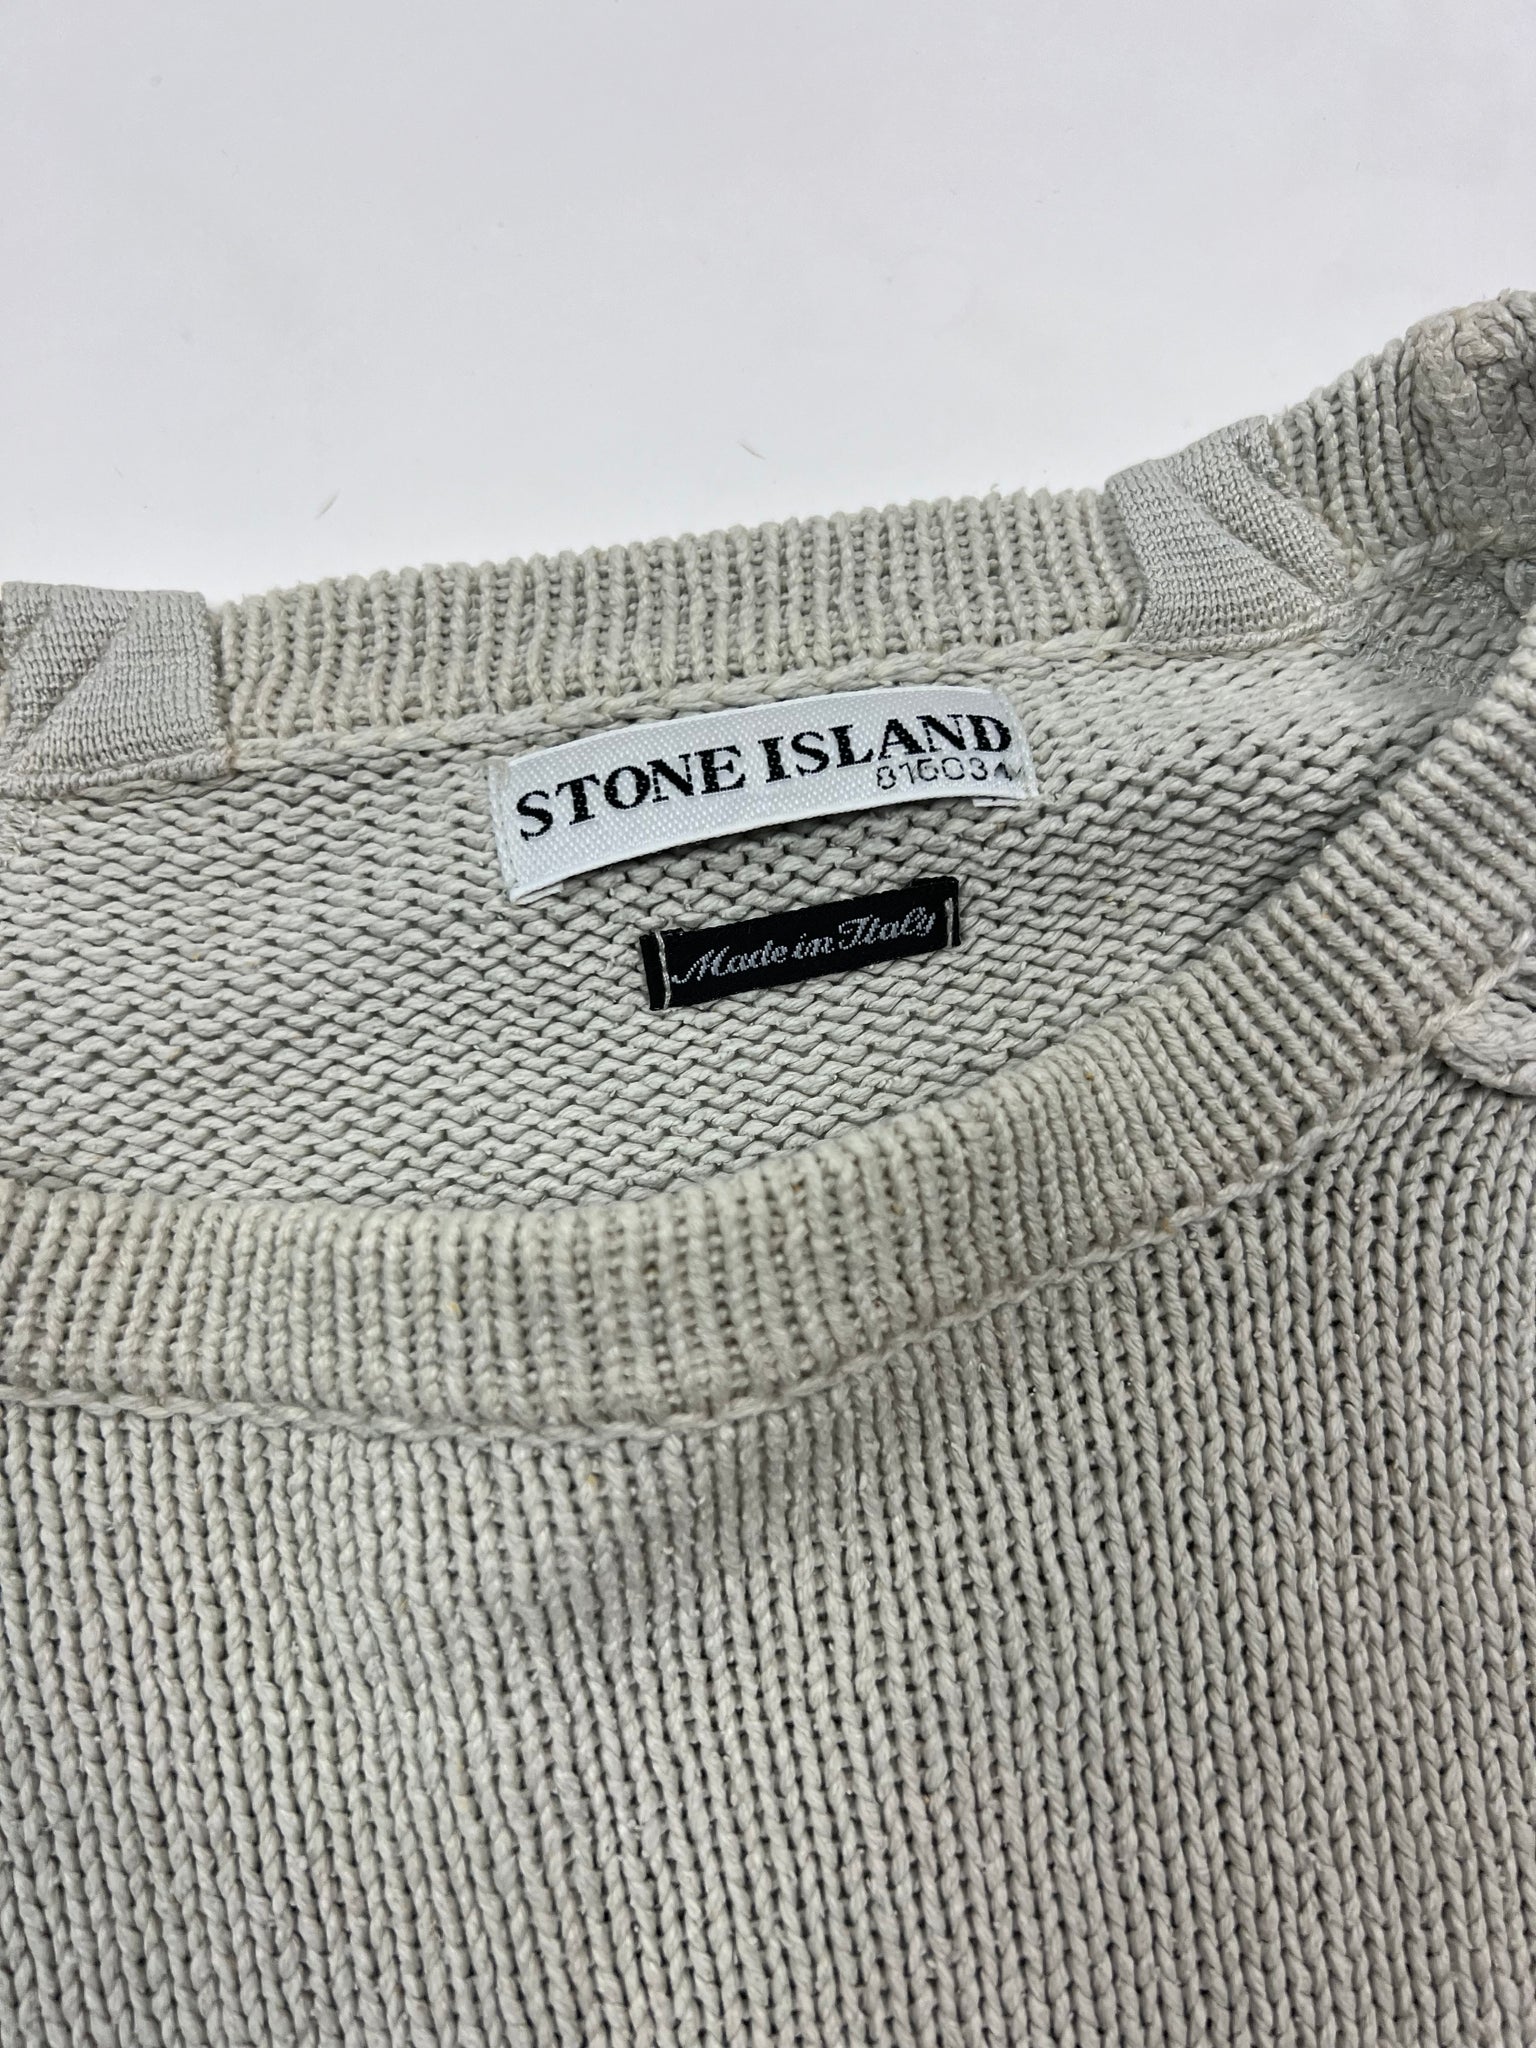 Stone Island Sweater (XL)